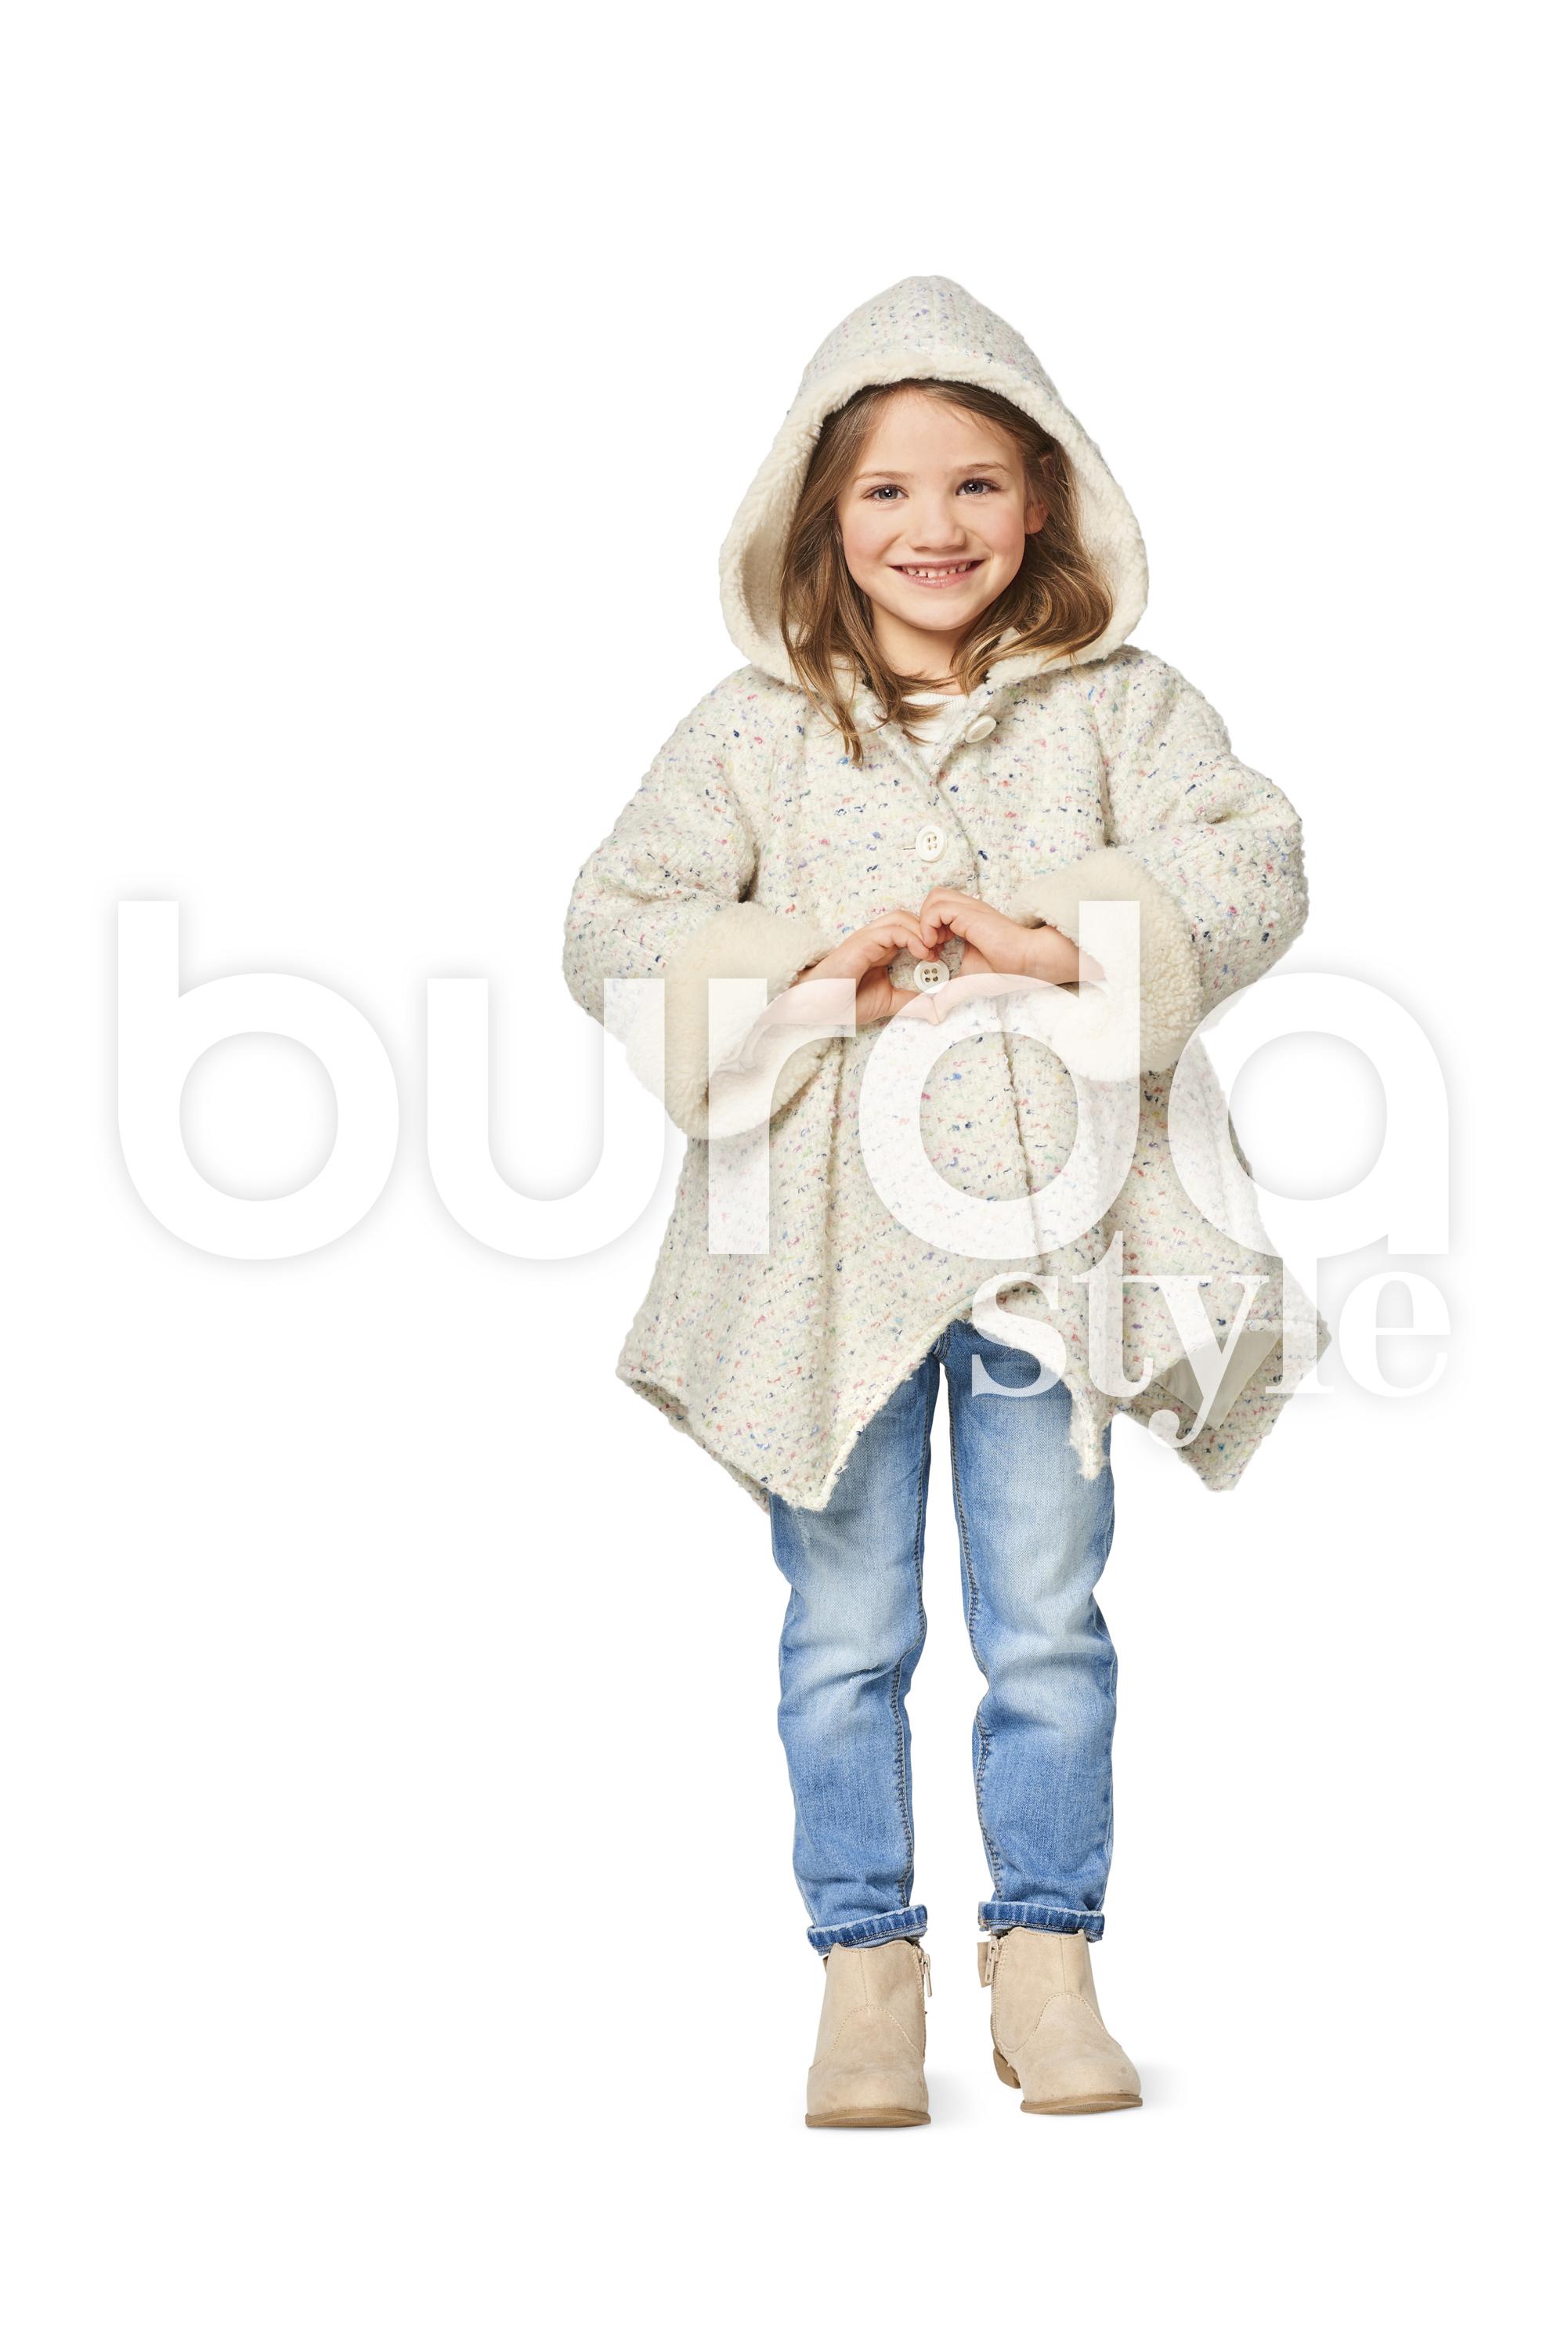 Burda B9353 Child's A-Line Coat